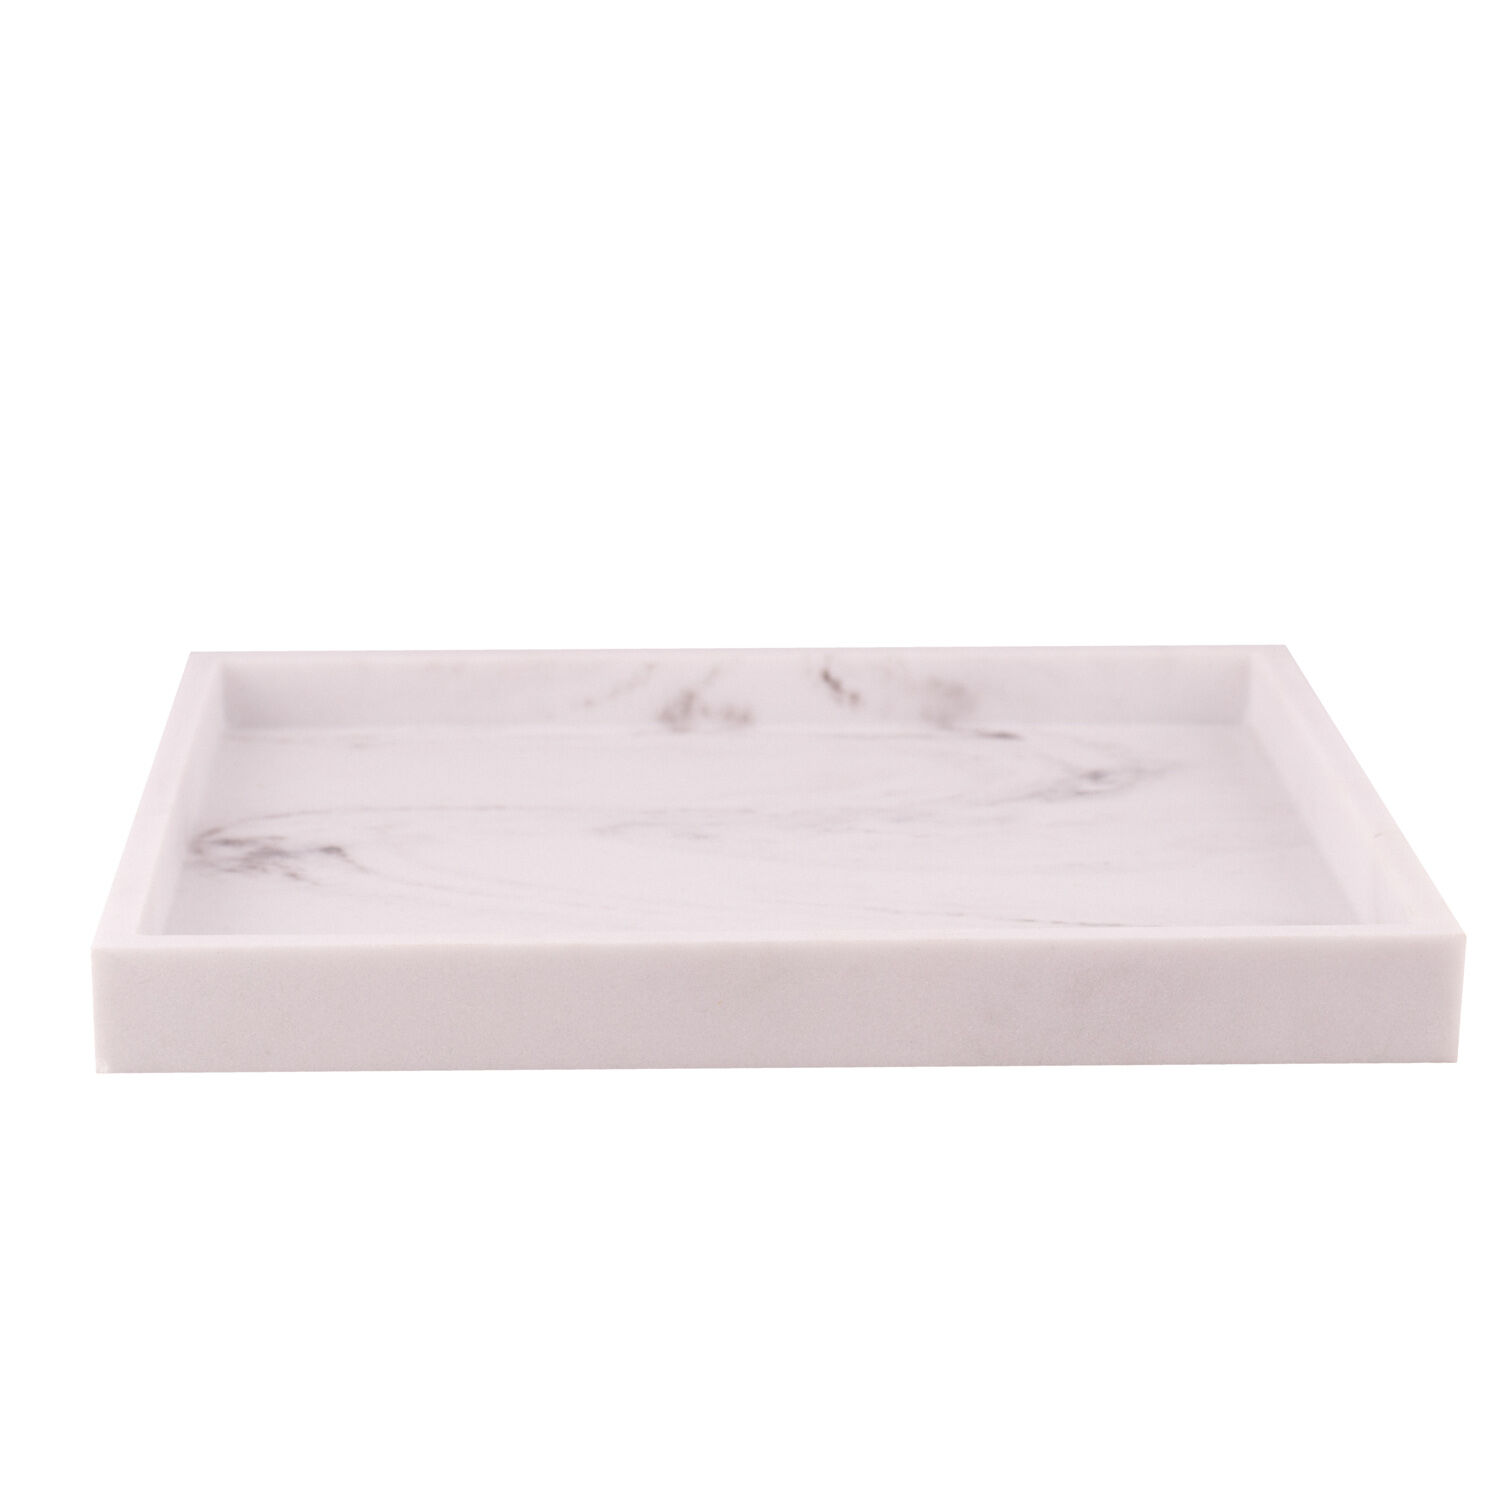 Standard produsent Fat marmor hvit 25x25cm